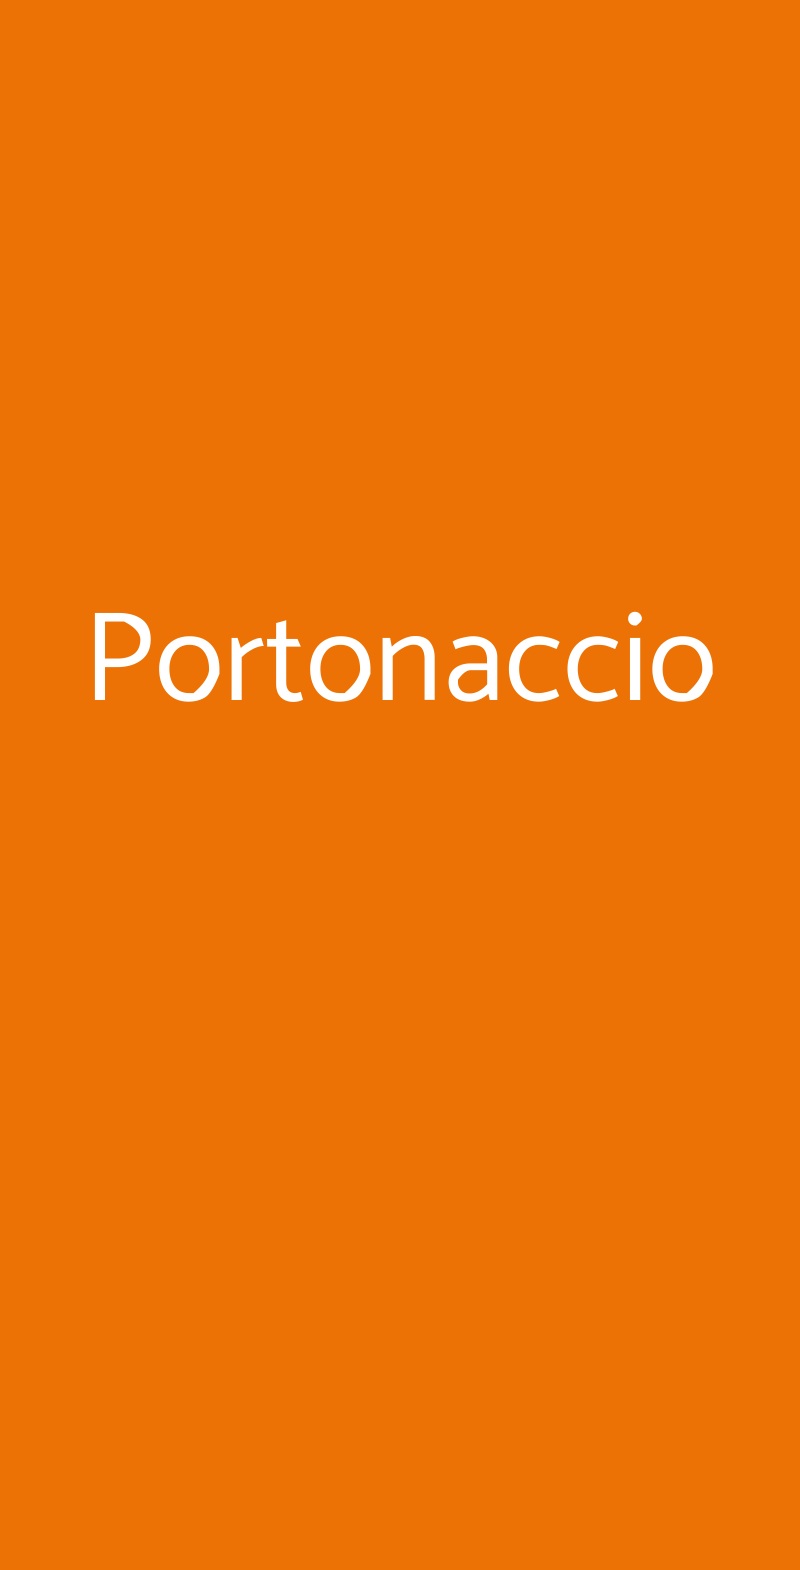 Portonaccio Pescara menù 1 pagina